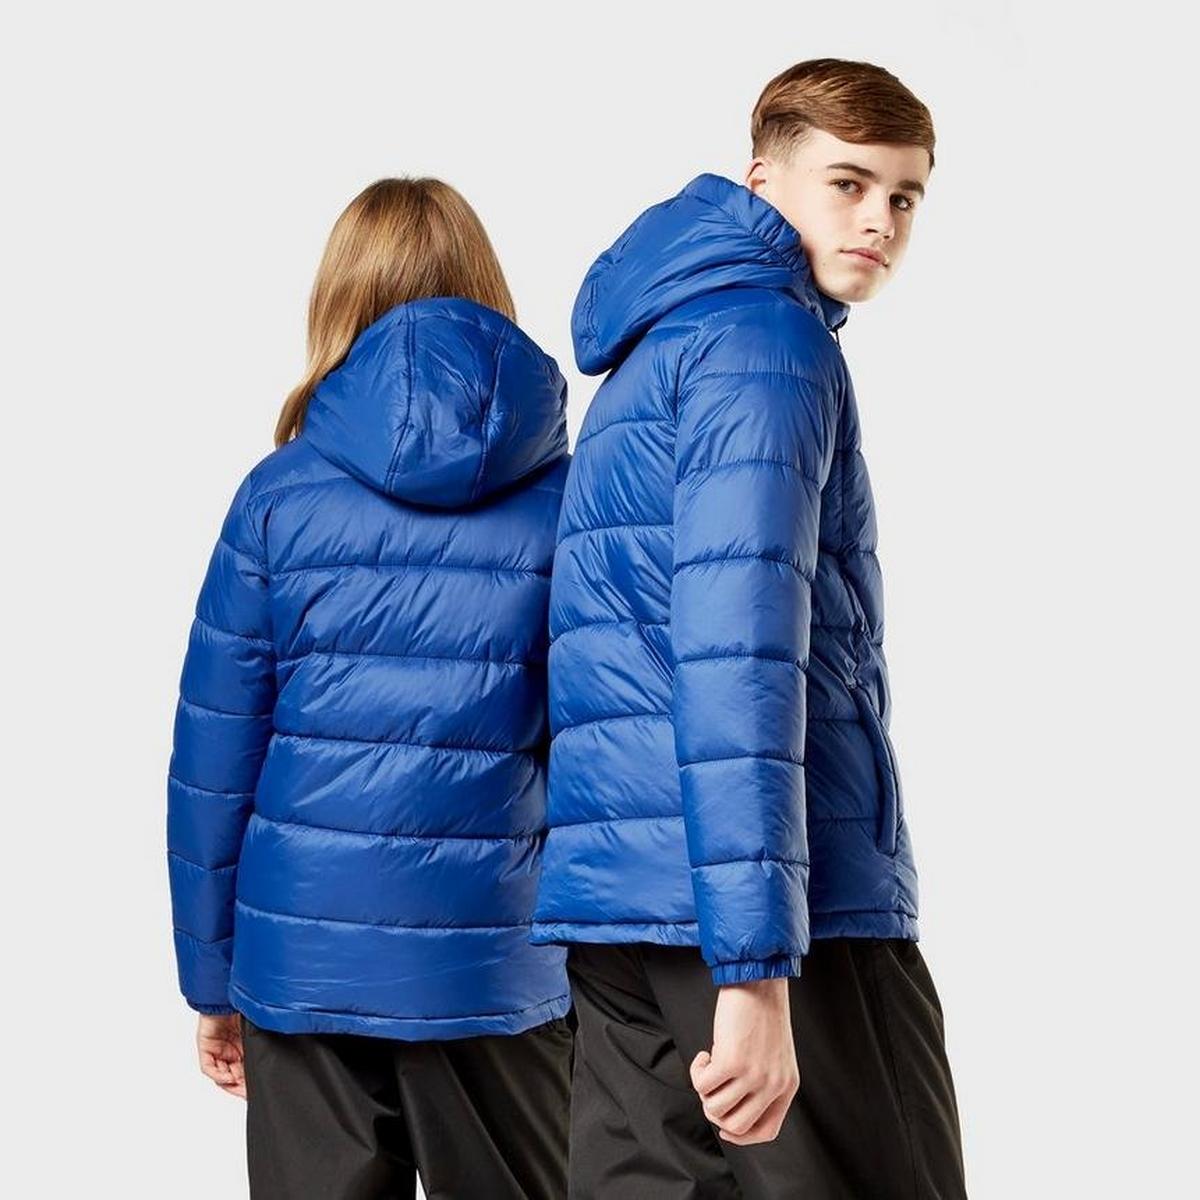 Berghaus Kids Burham Insulated Jacket - Soladite Blue